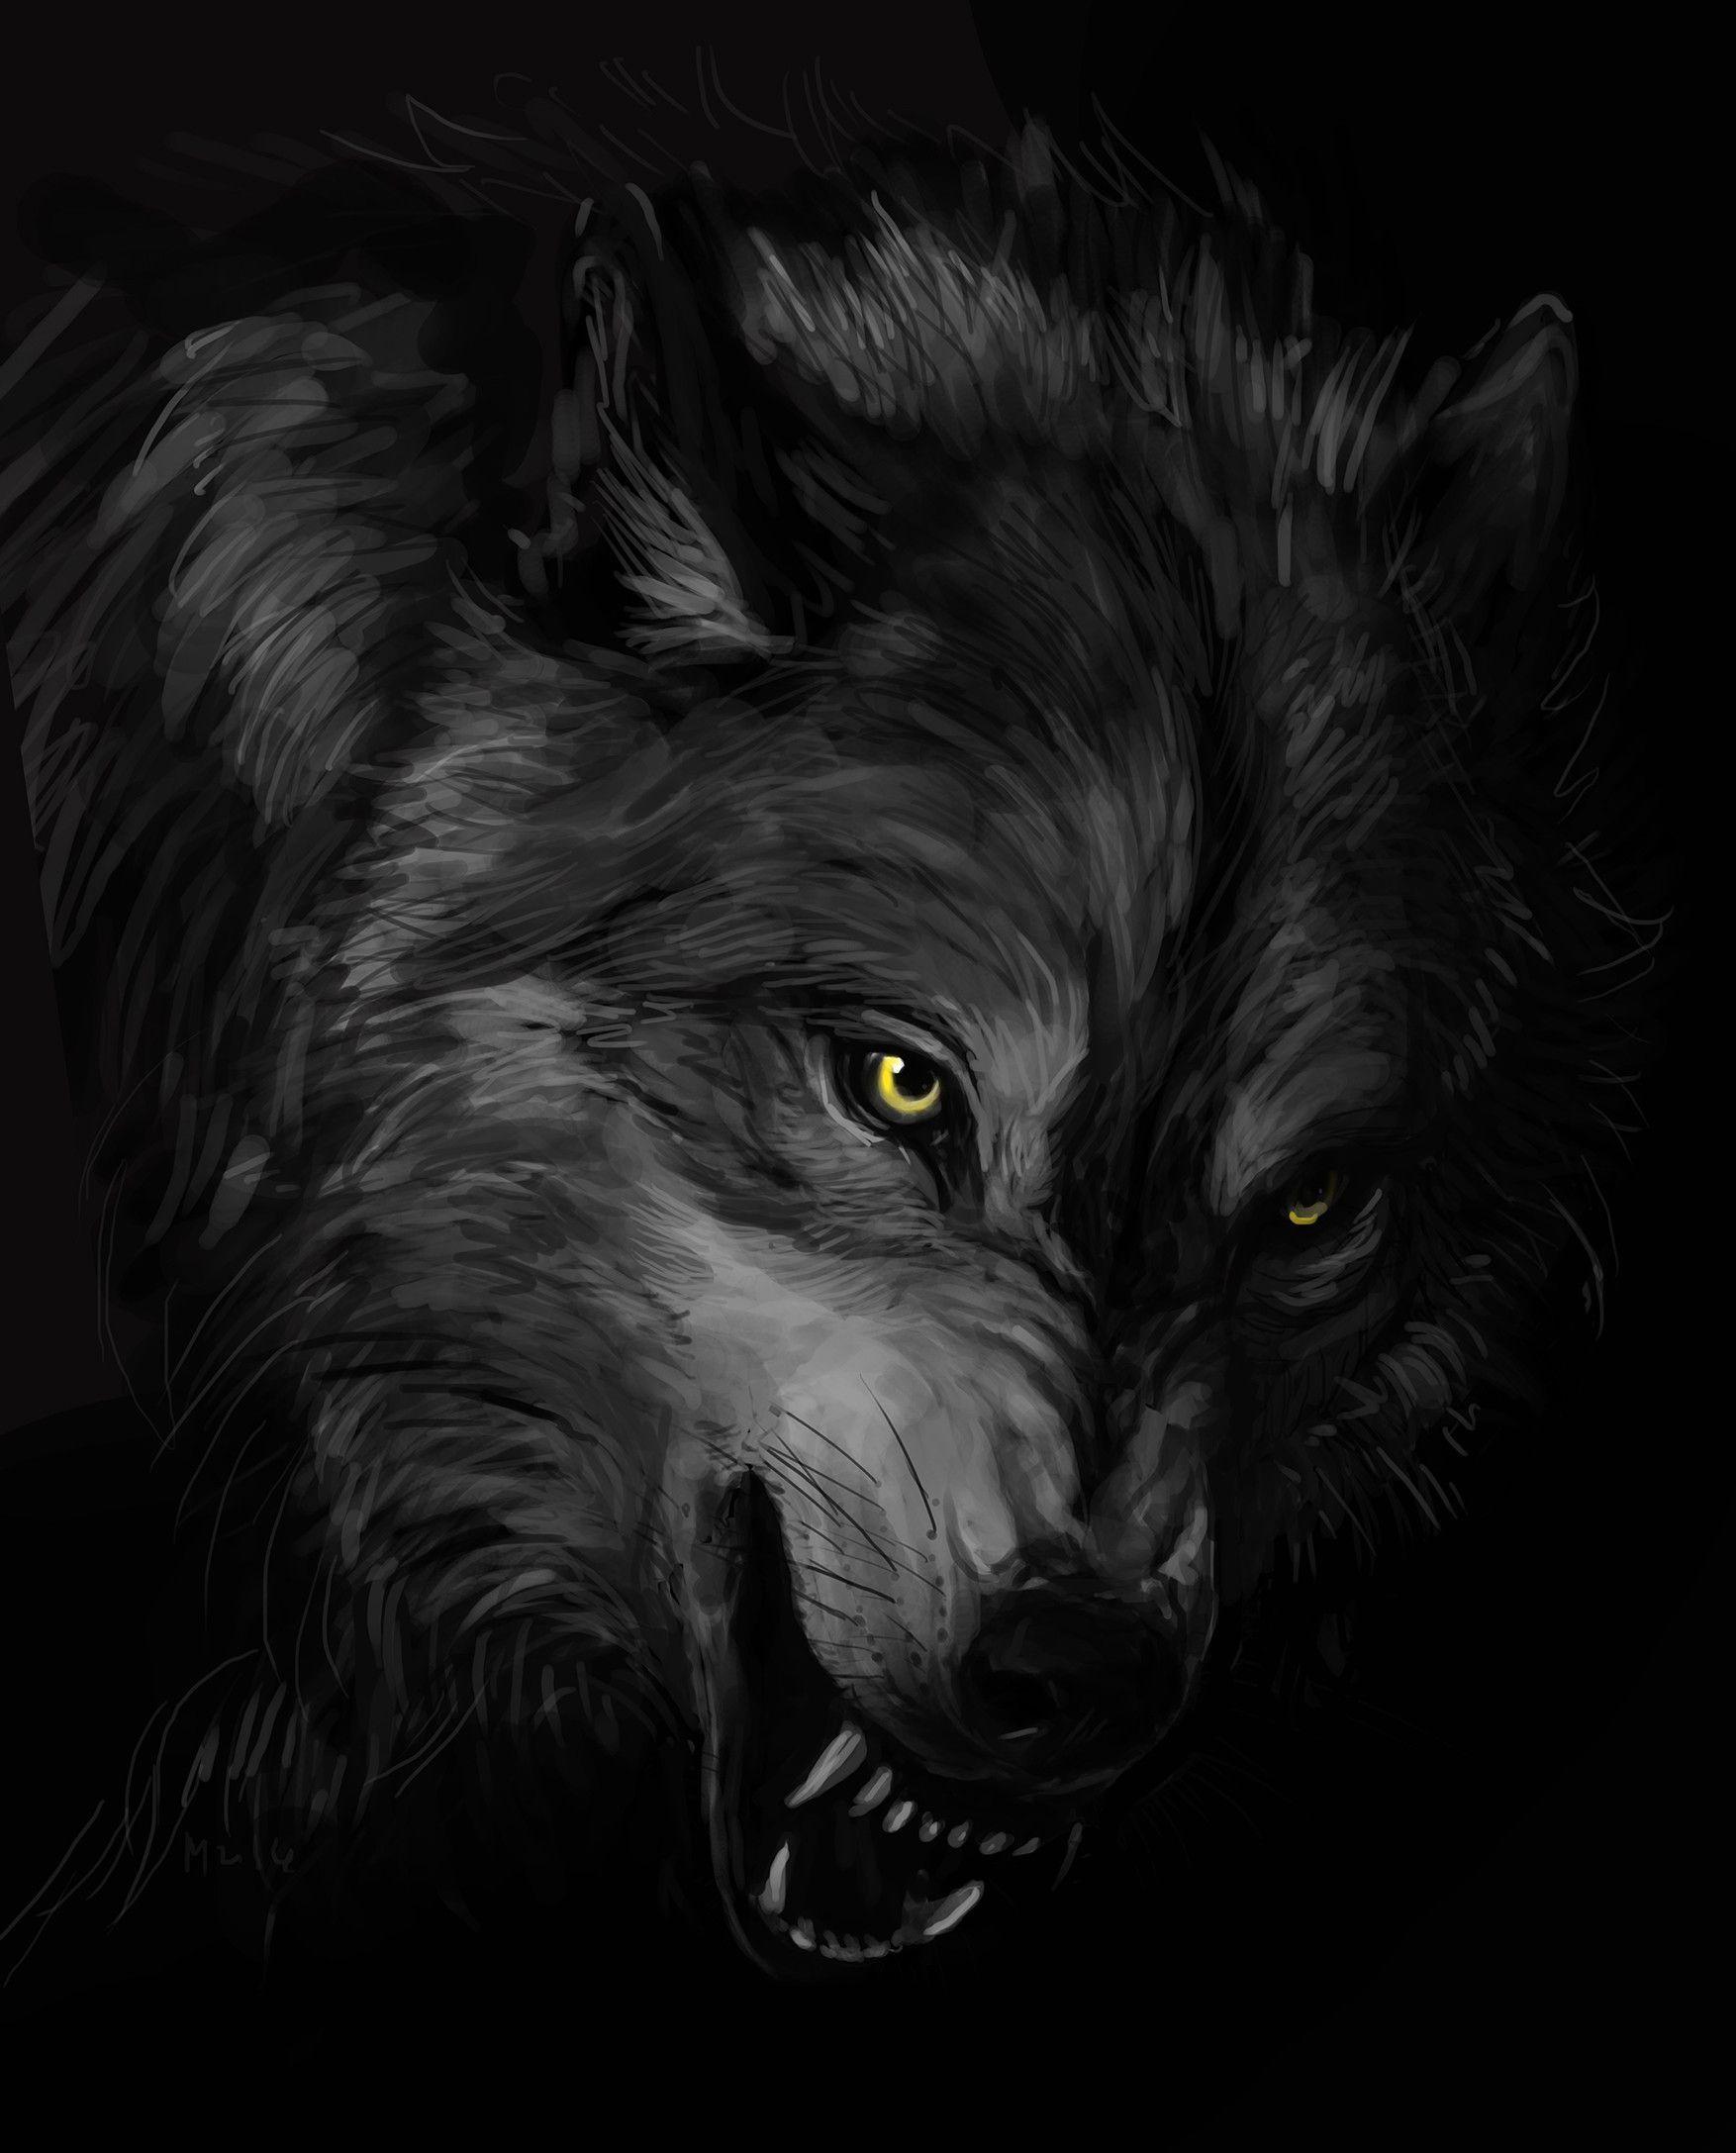 Drawn Black Cat Black Wolf  Black Wolf PNG Image  Transparent PNG Free  Download on SeekPNG